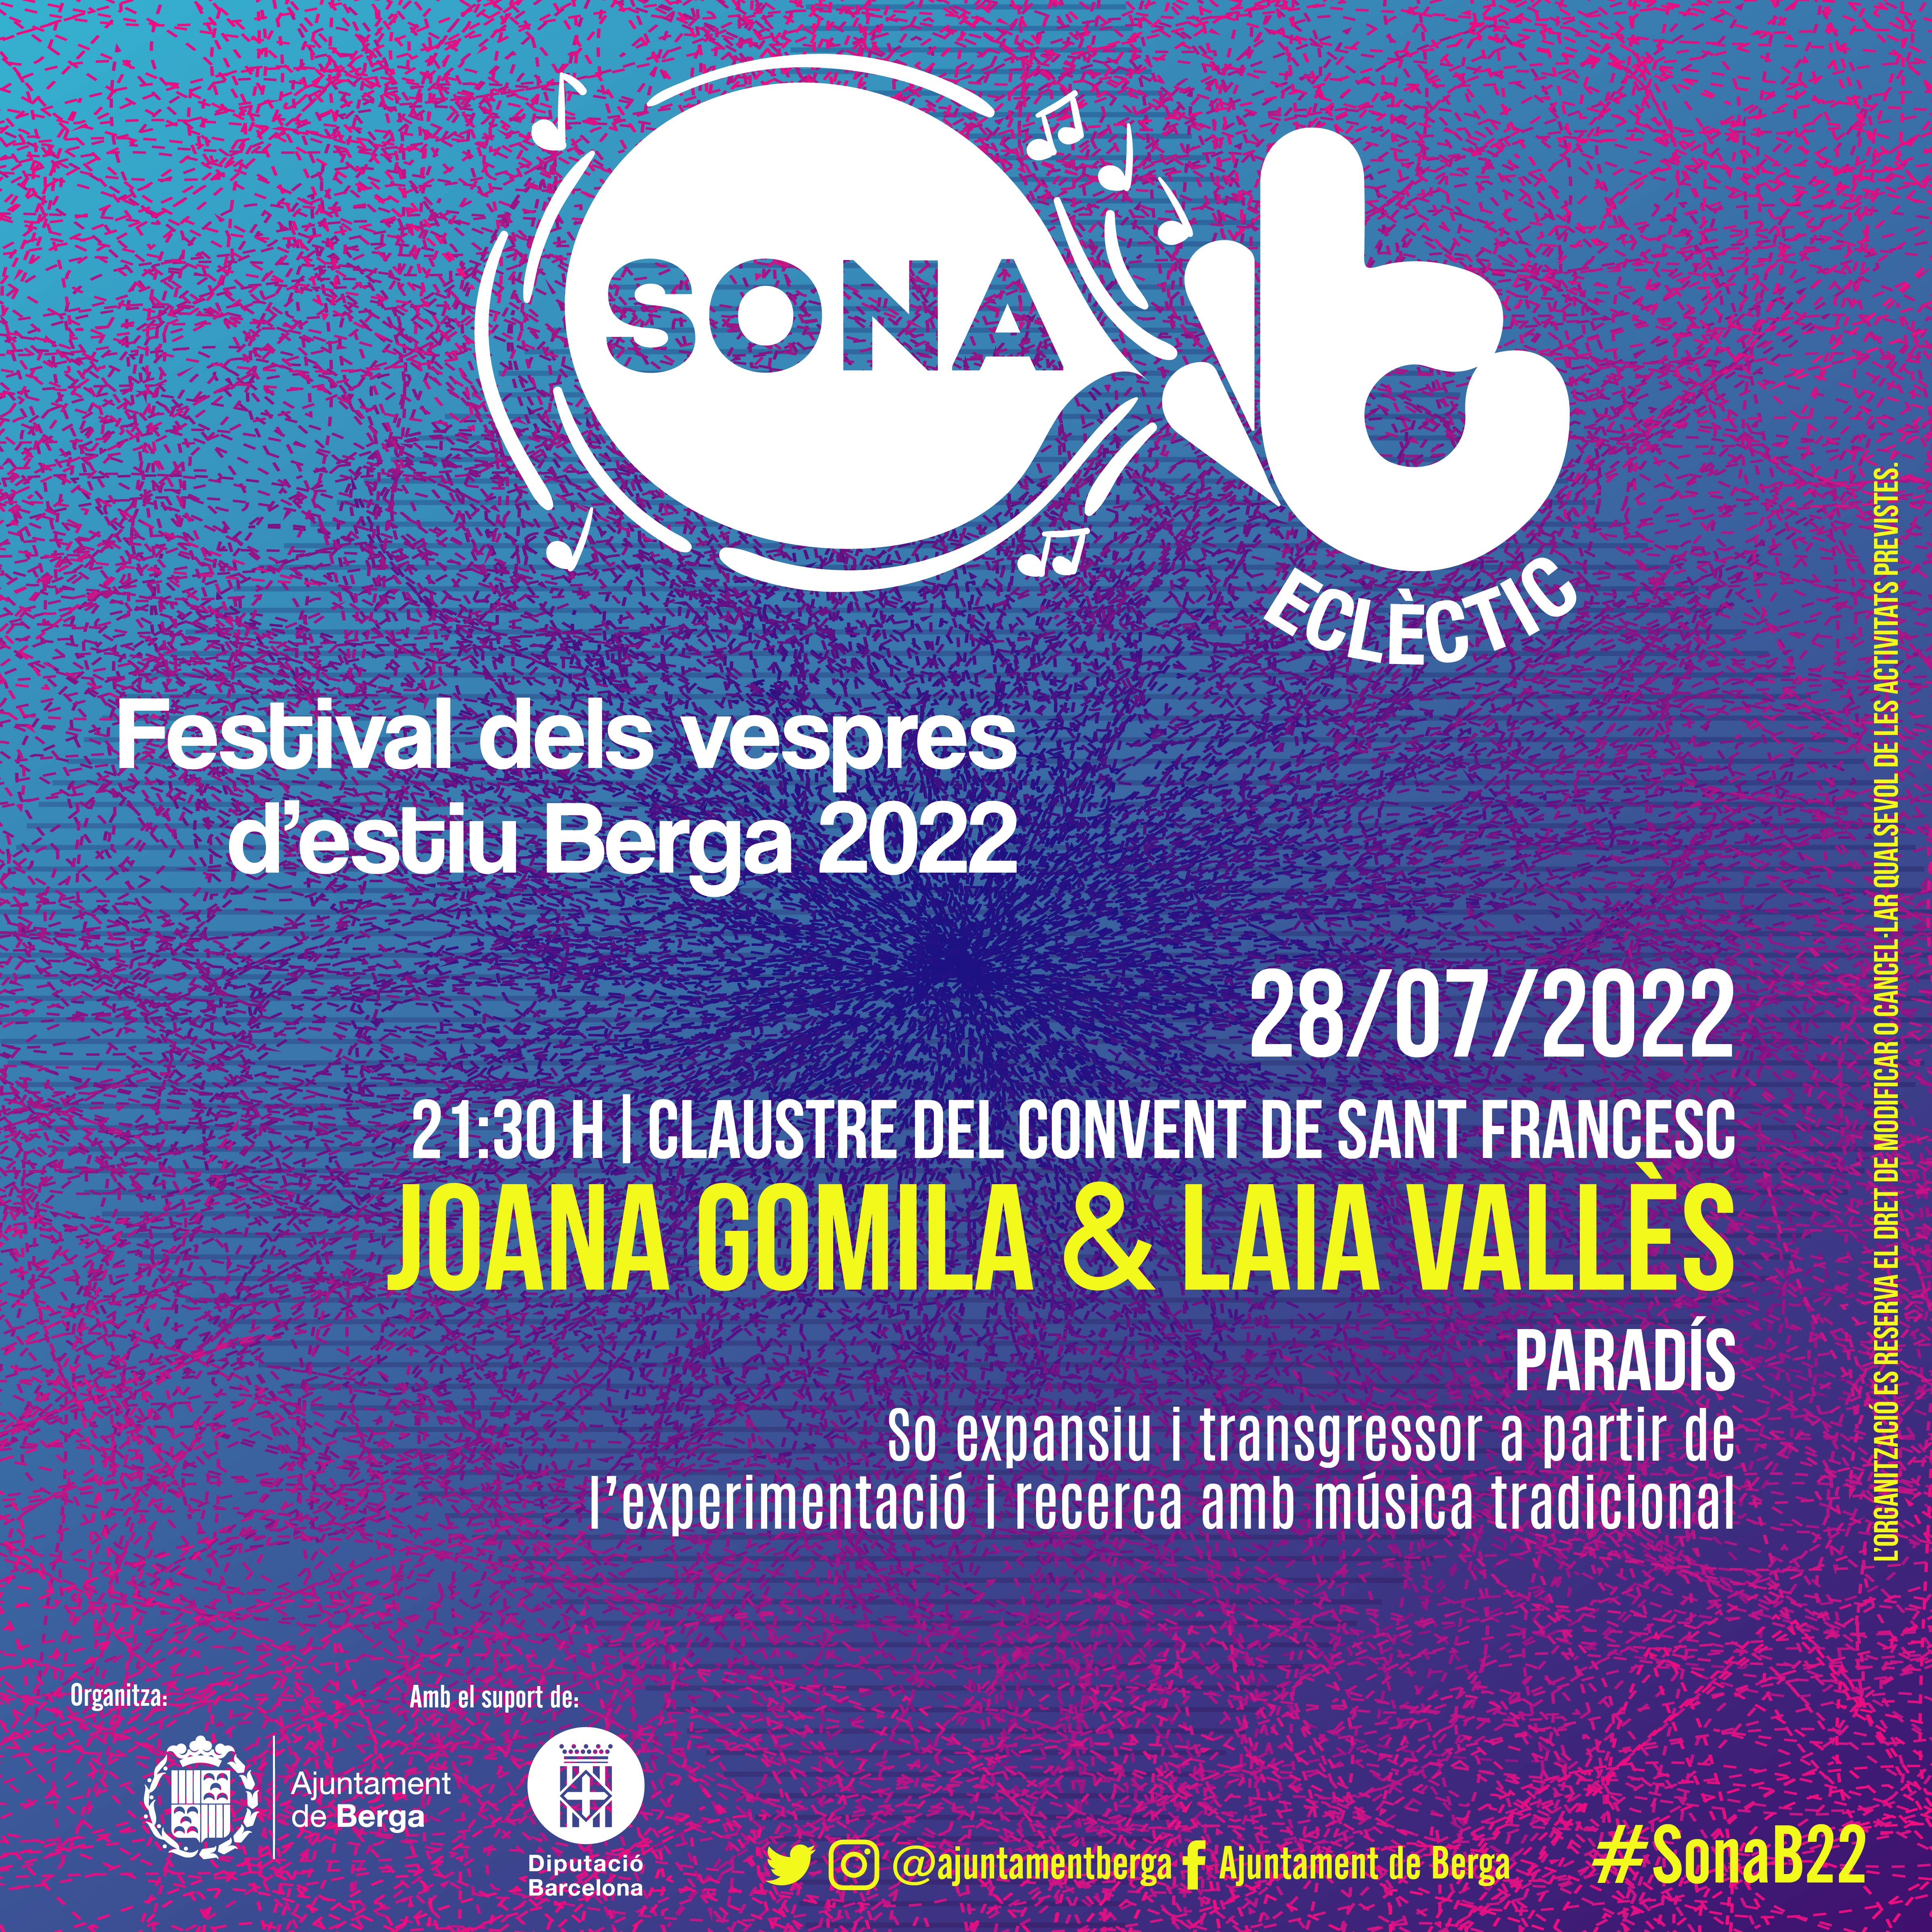 SonaB Eclèctic: Joana Gomila & Laia Vallès 